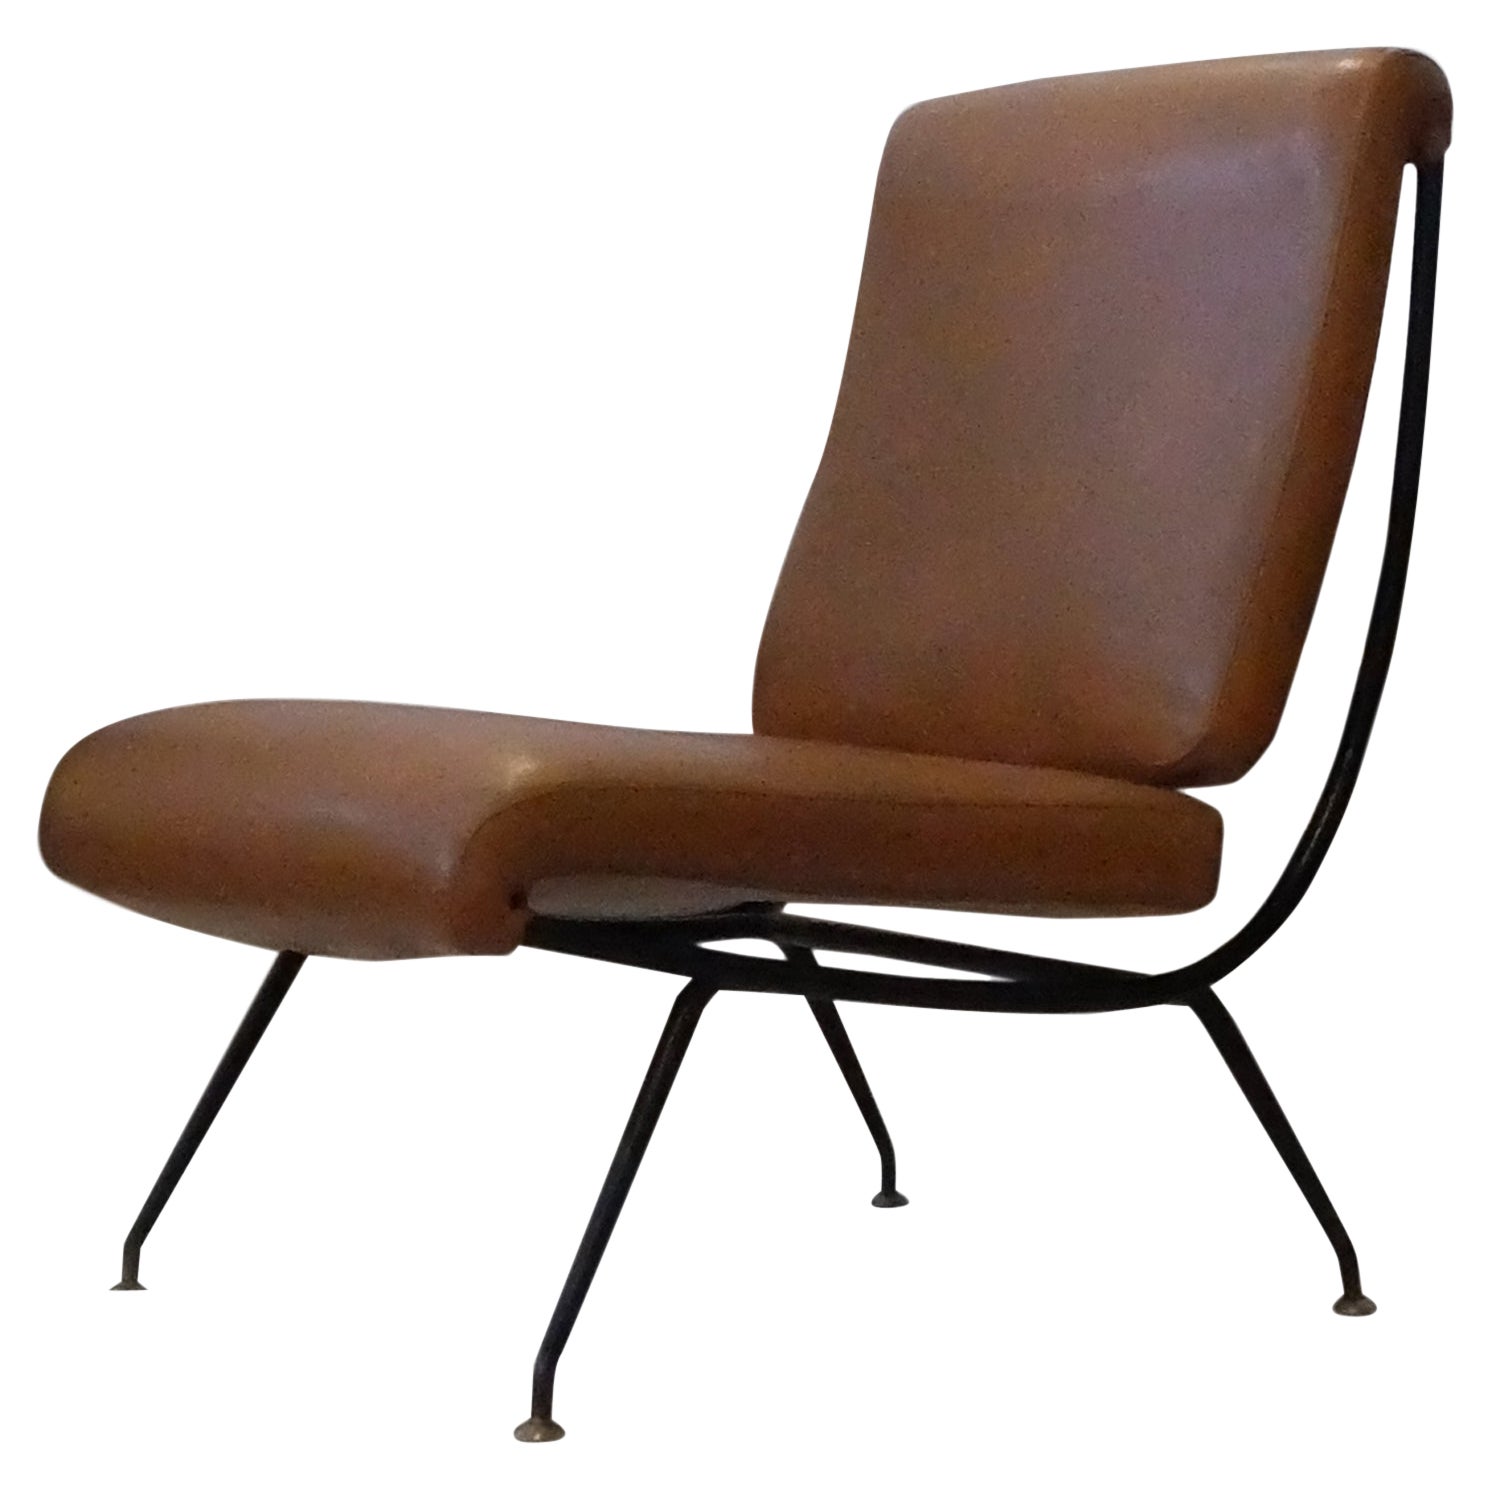 Gastone Rinaldi for RIMA, Mid-Century Modern Leather Armchair Model DU24, 1956